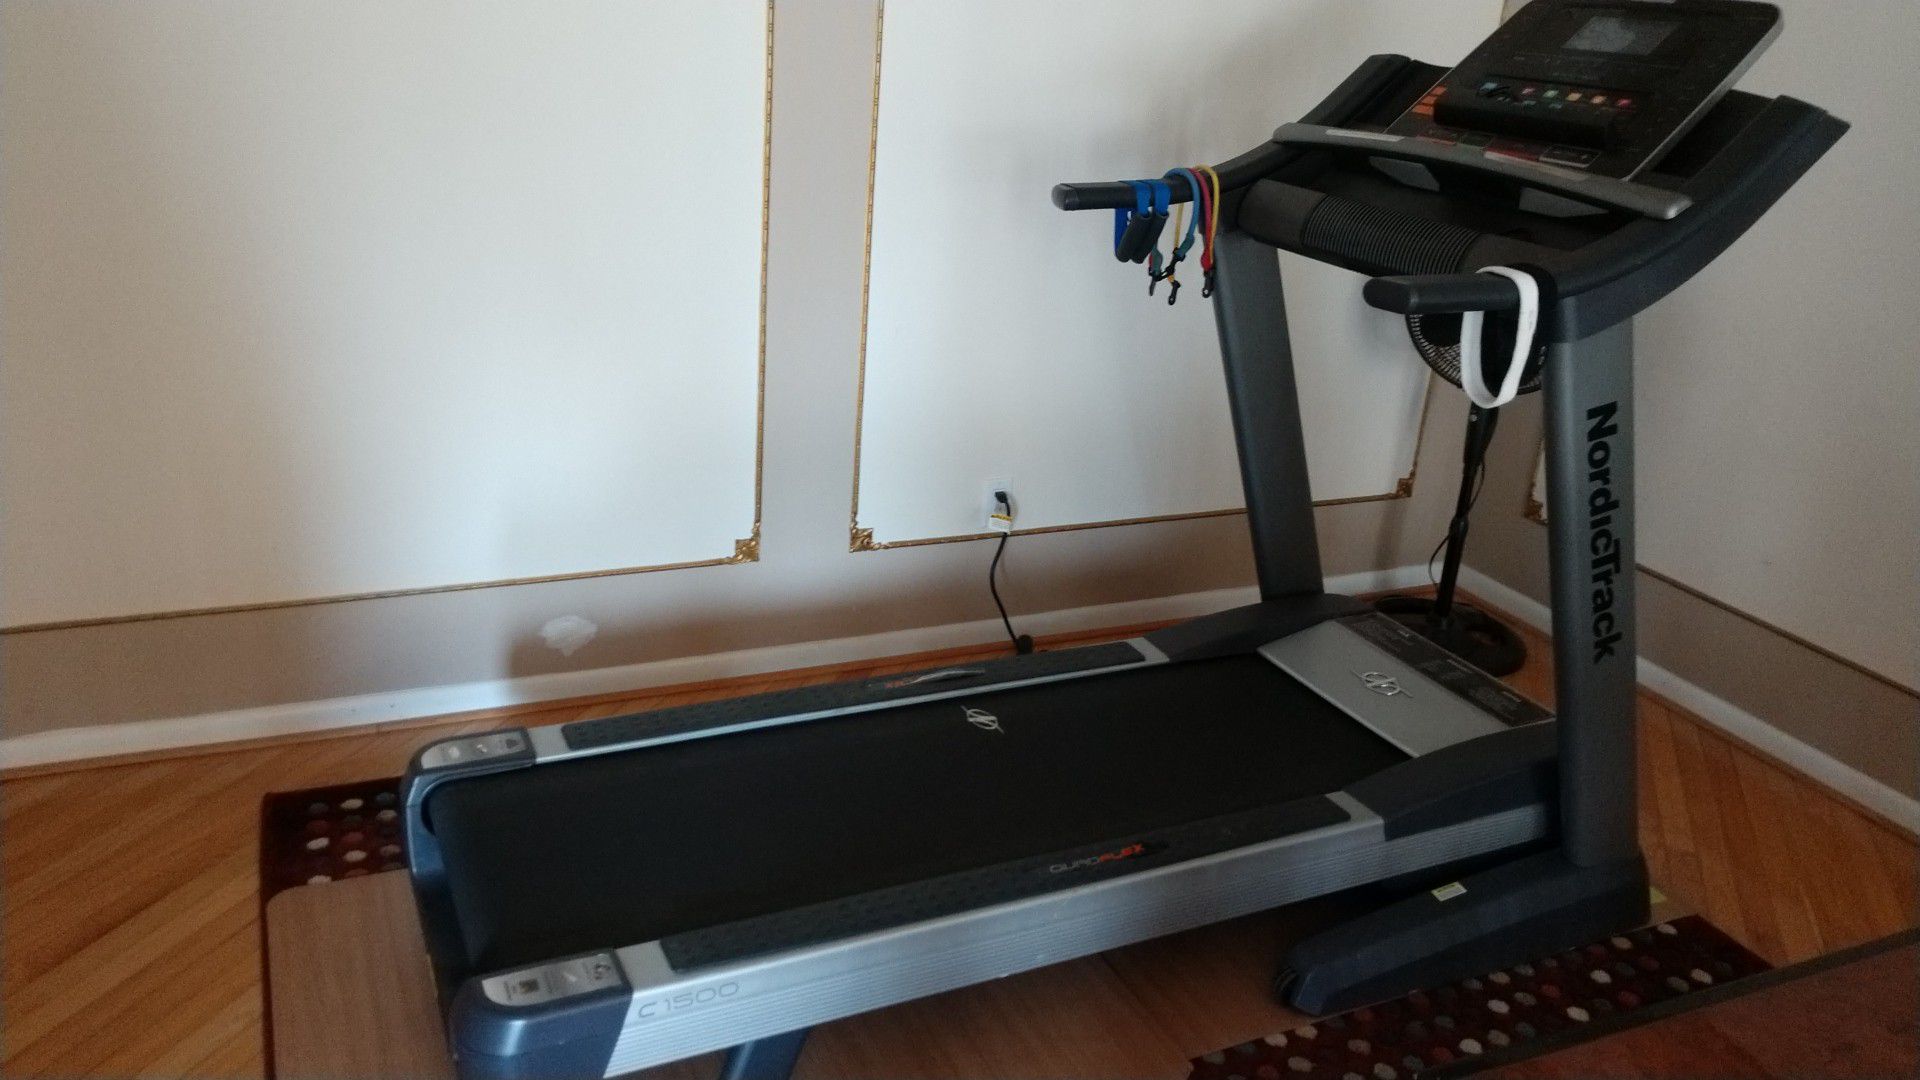 NordicTrack treadmill c 1500